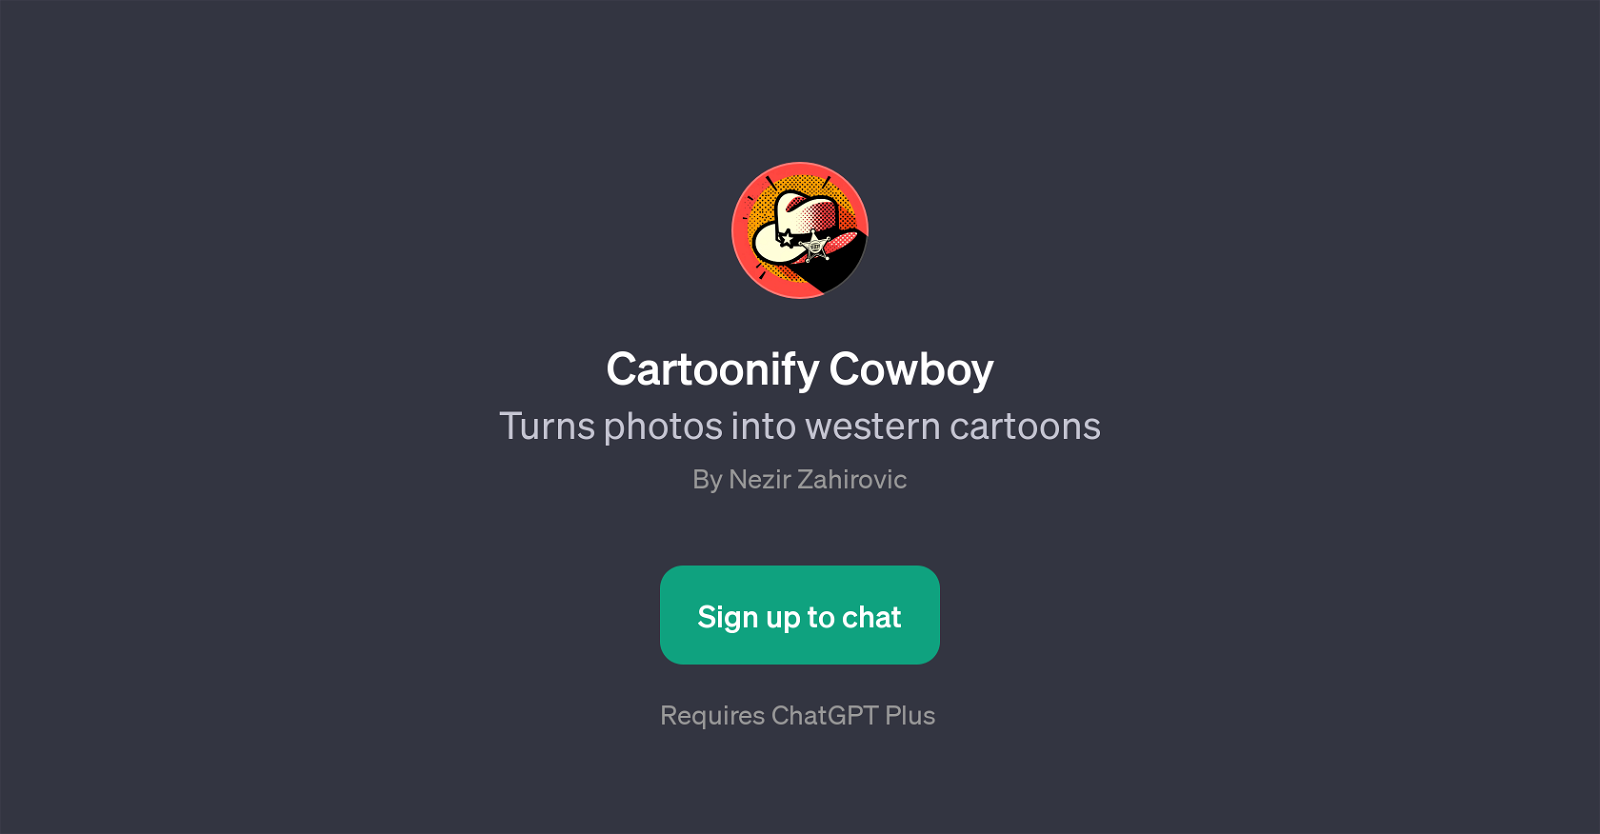 Cartoonify Cowboy website